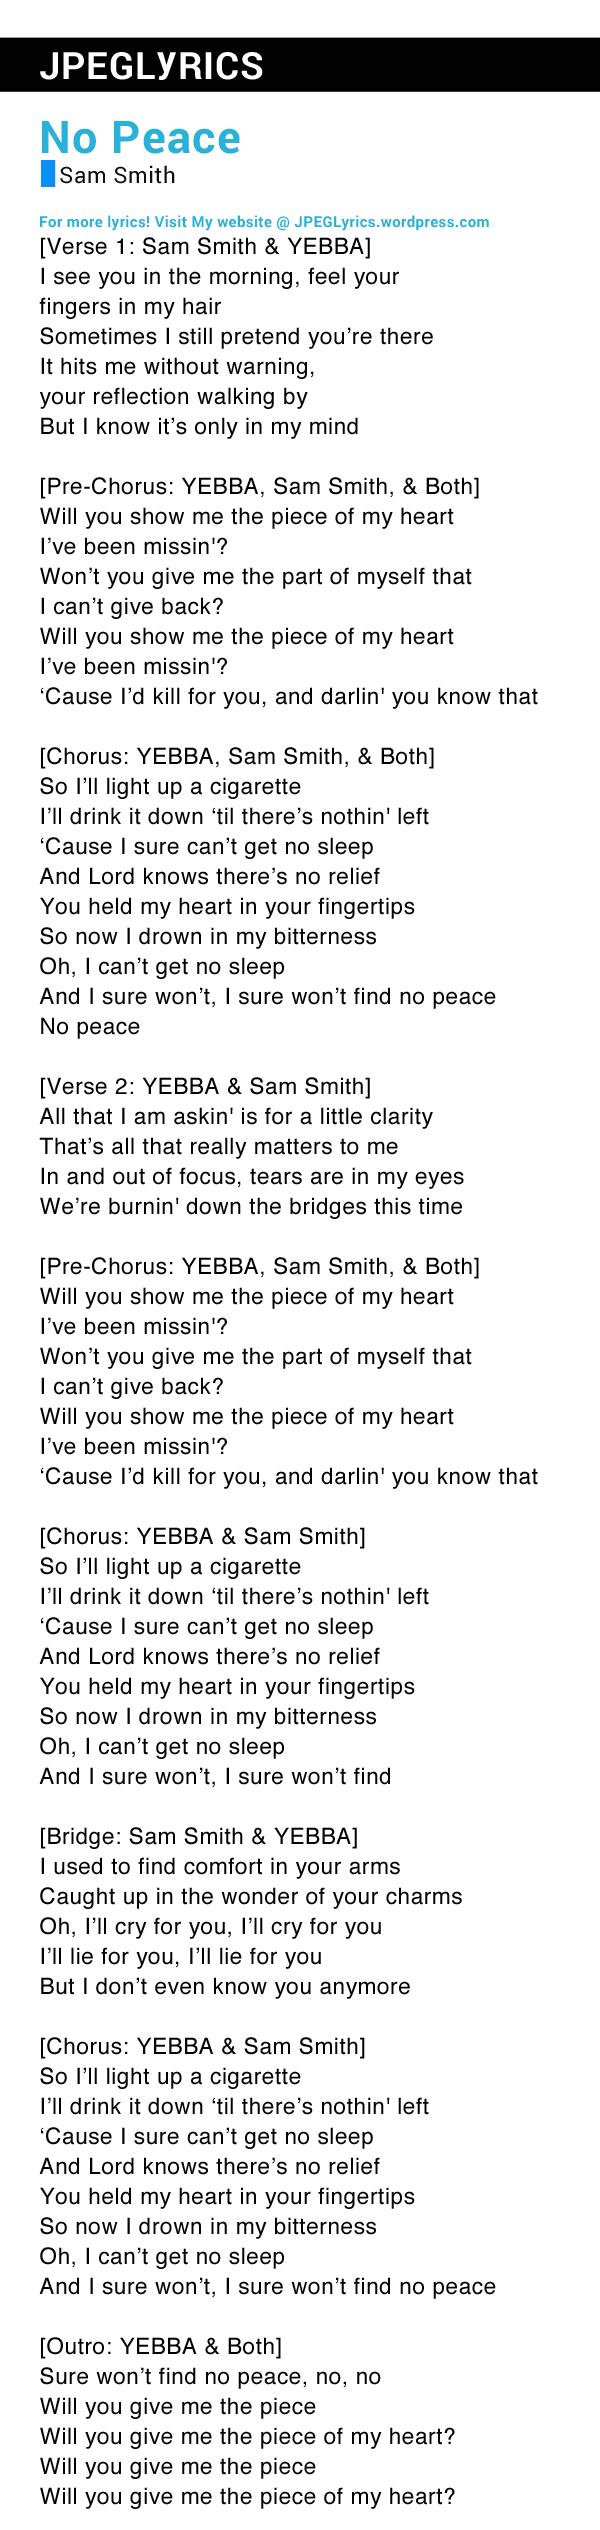 No Peace By Sam Smith Lyrics Jpeg Lyrics